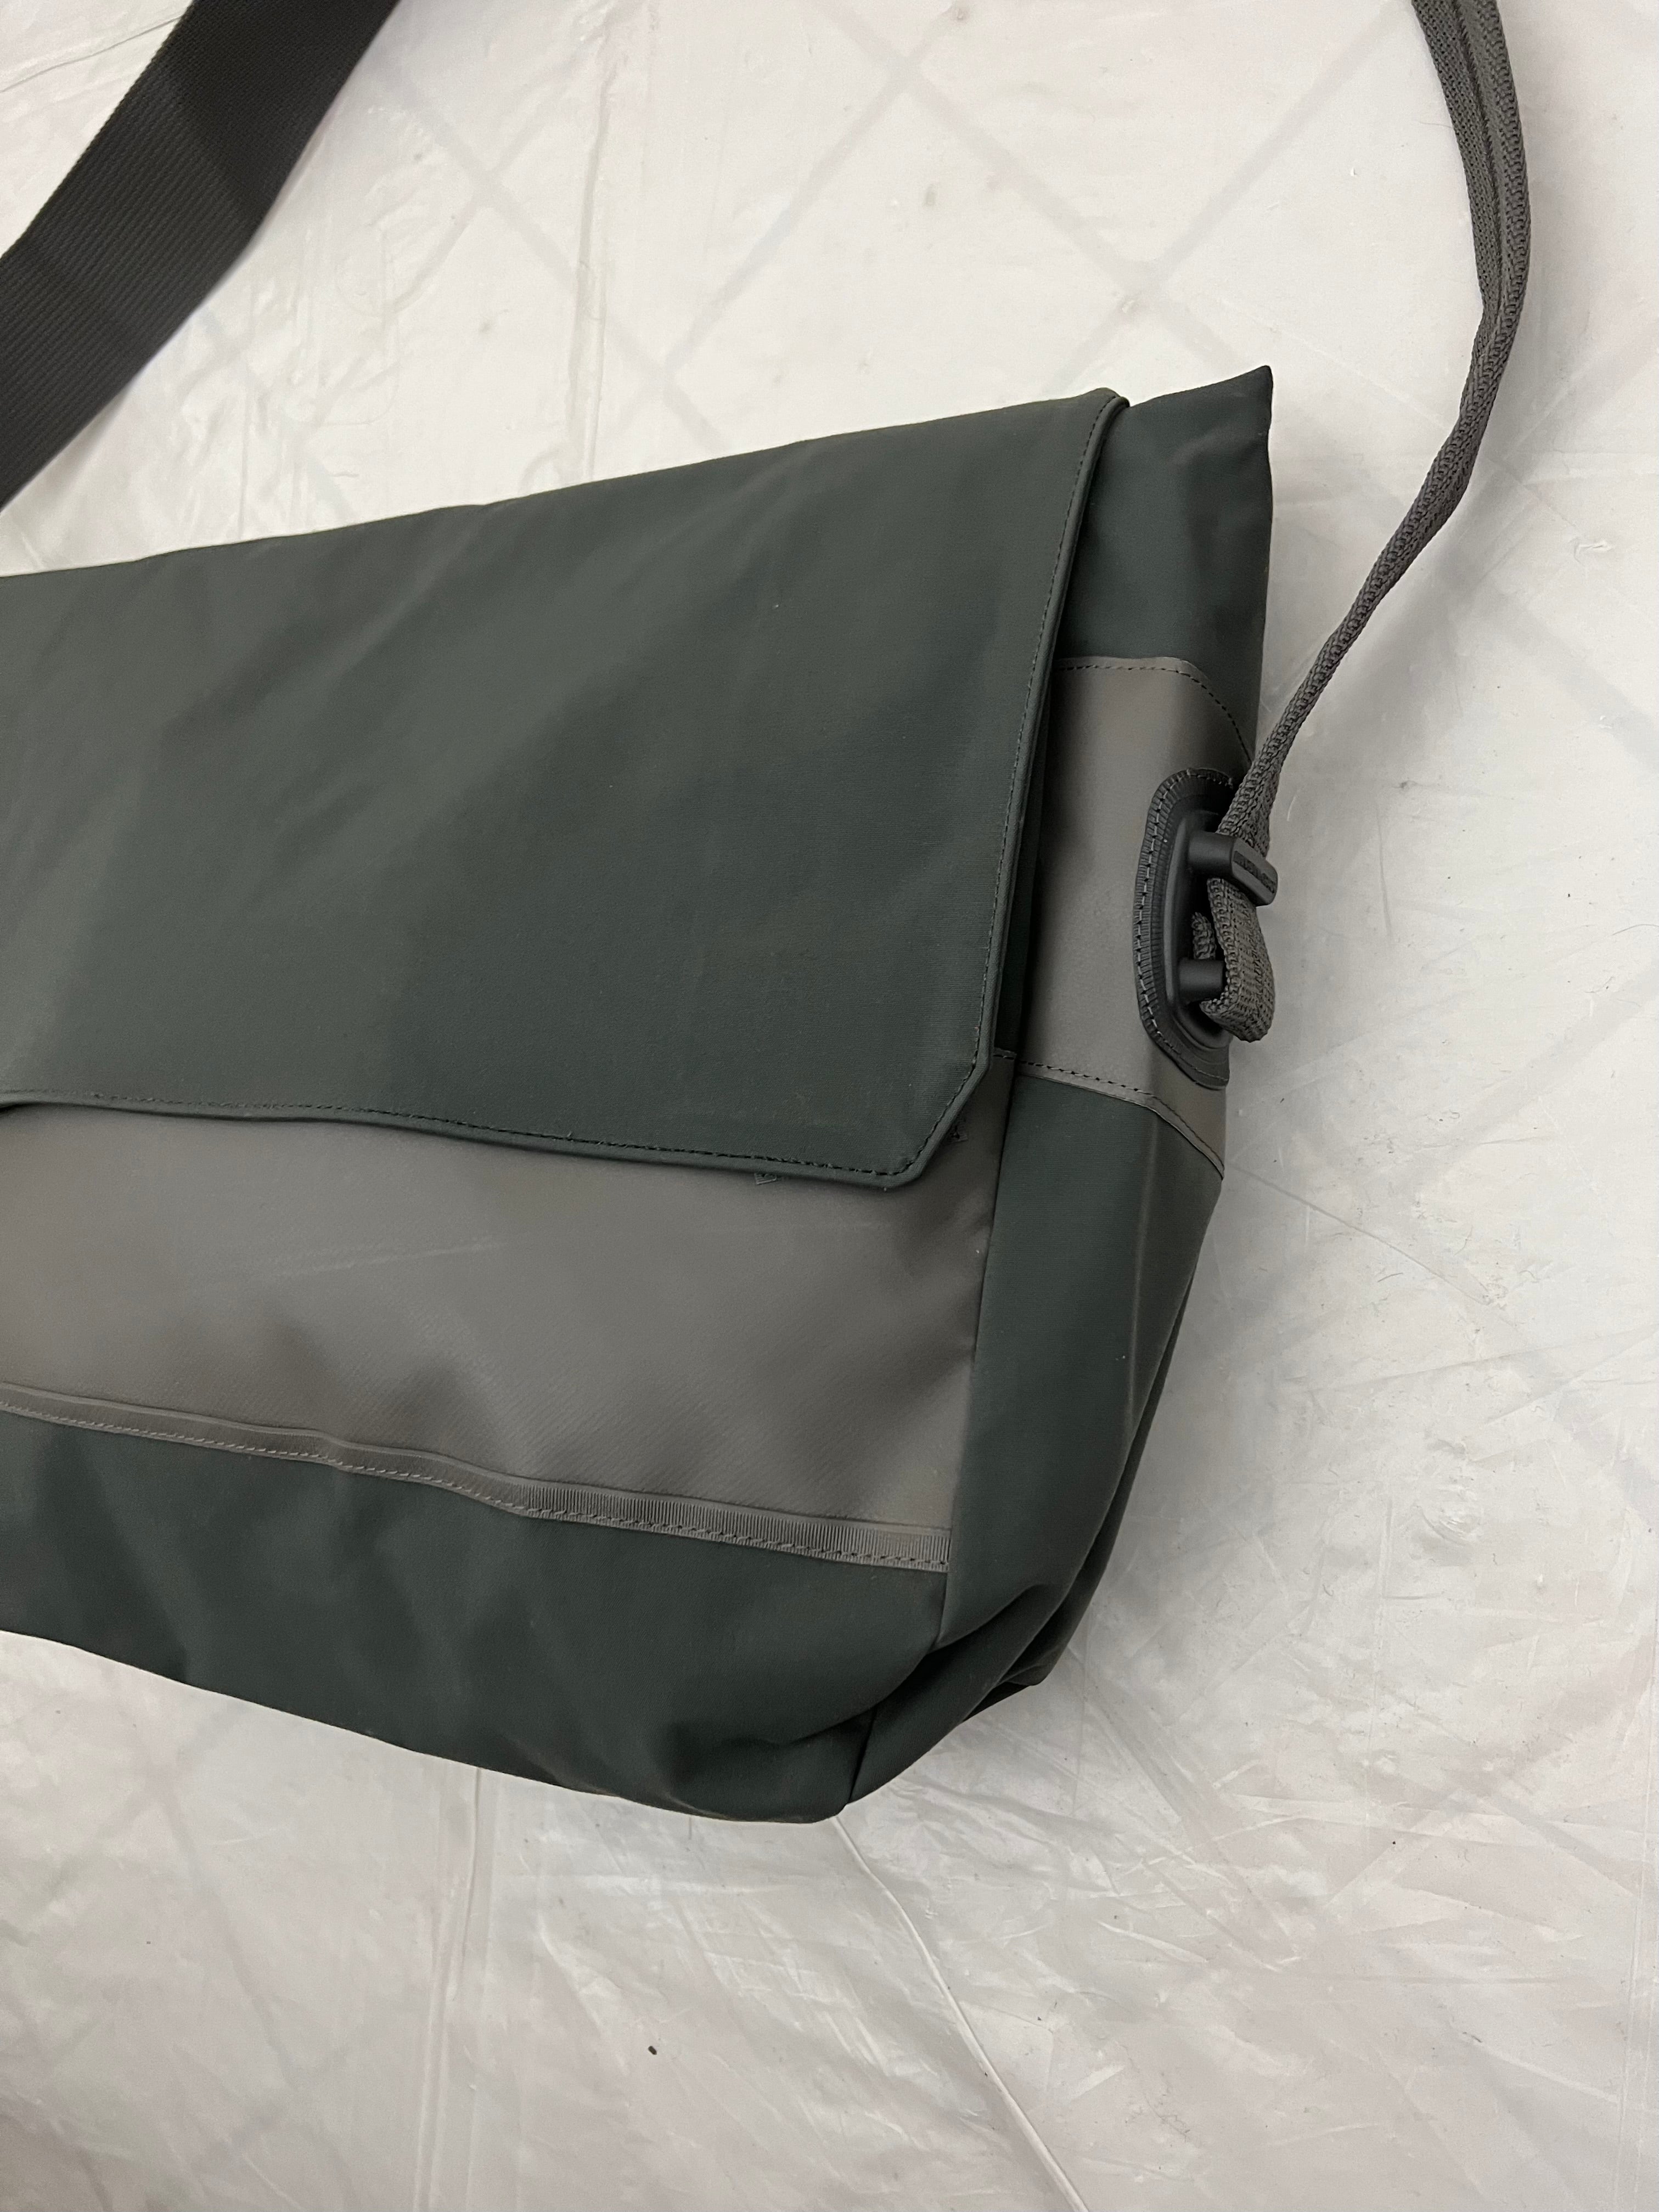 Late 1990s Mandarina Duck Slate Green Messenger Bag - Size OS